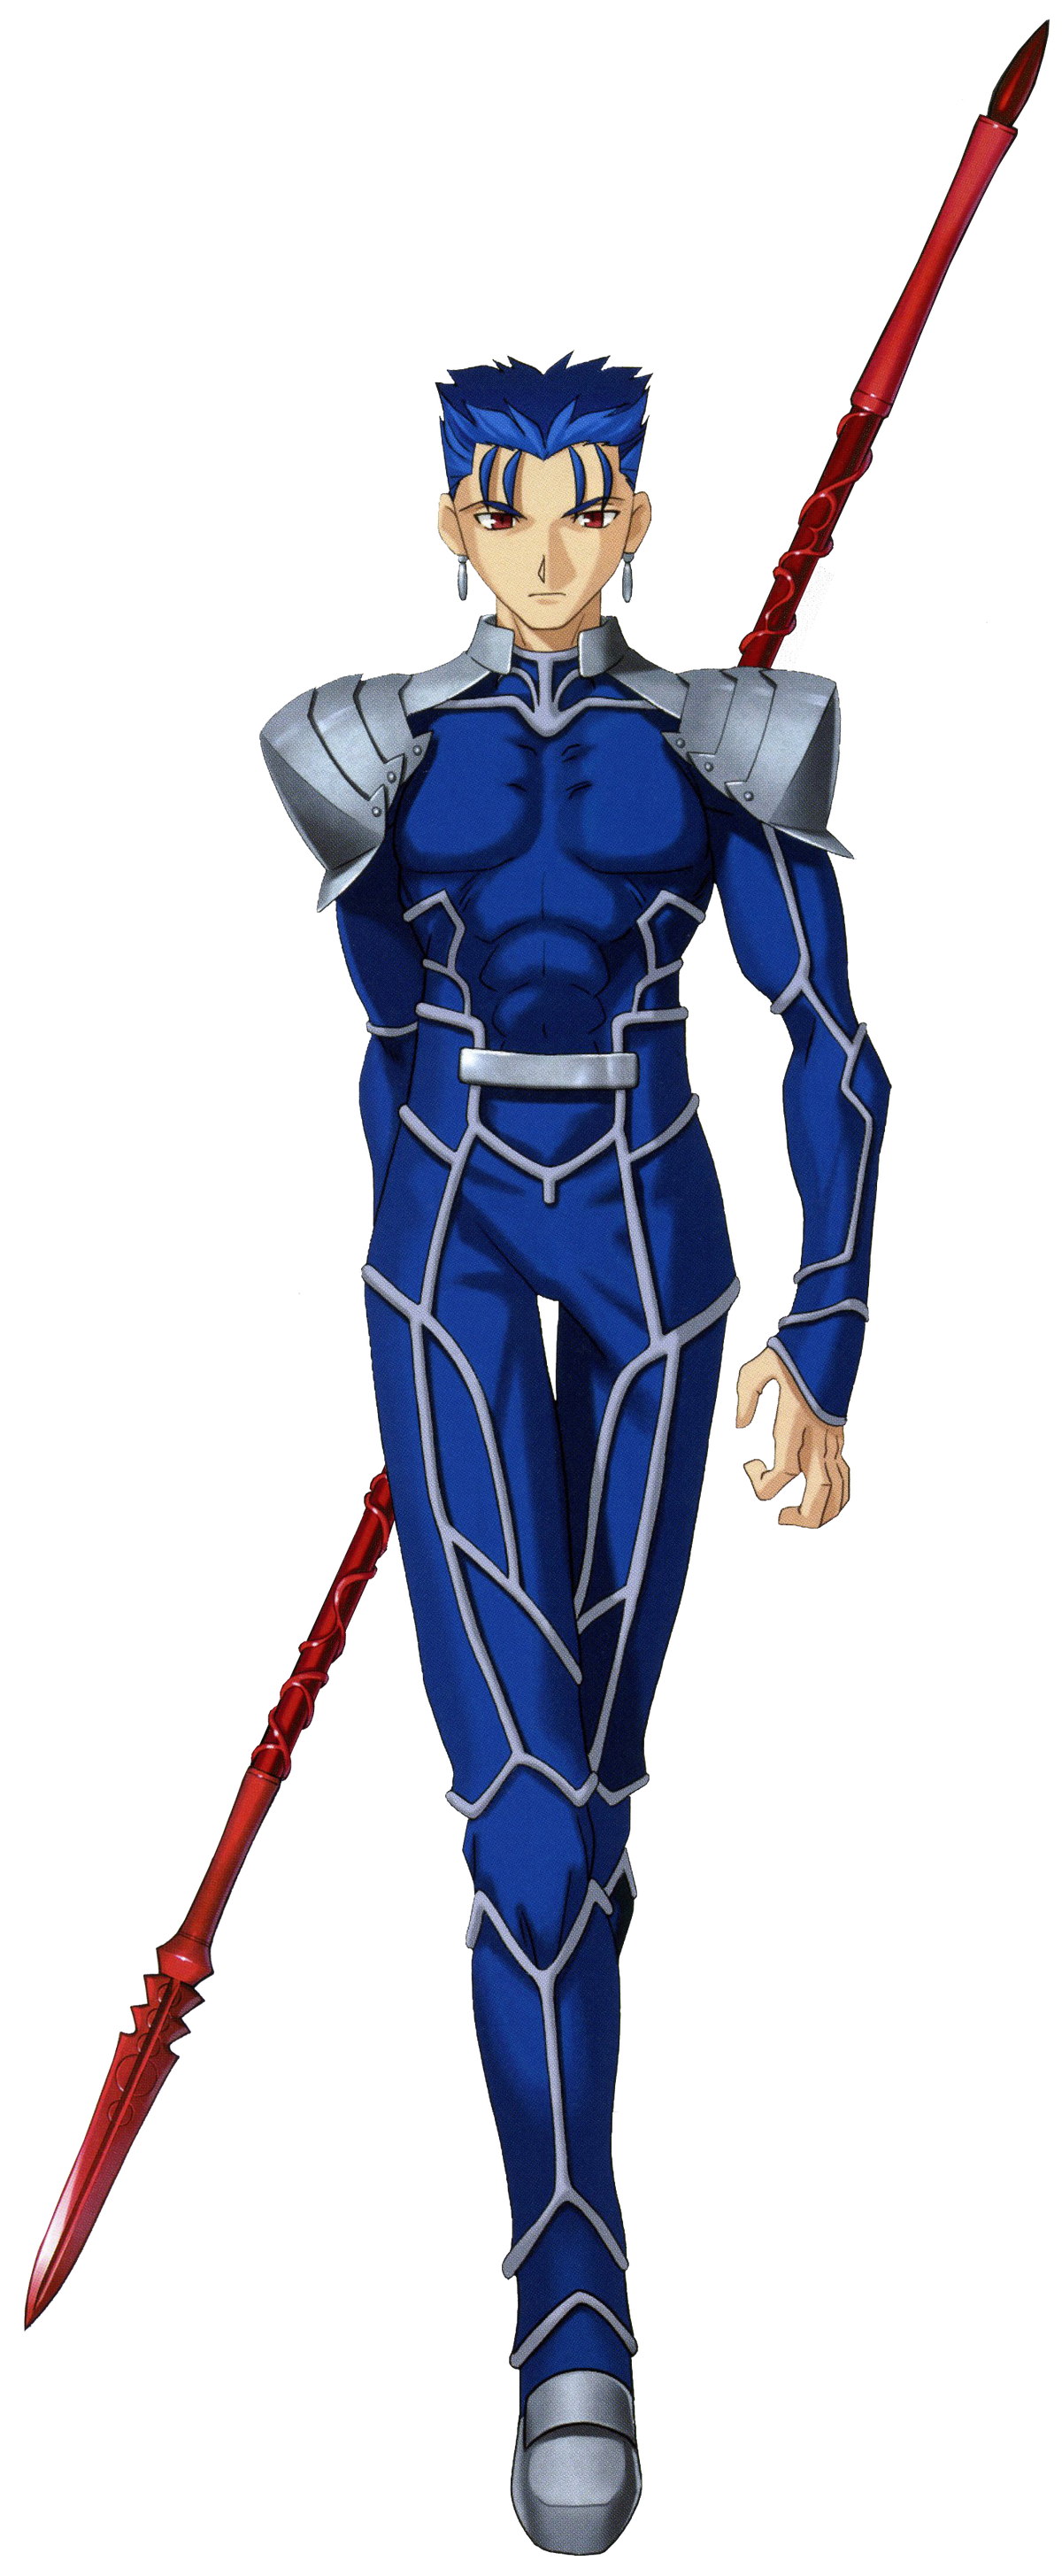 Lancer (Fate/Zero), Wiki TYPE-MOON